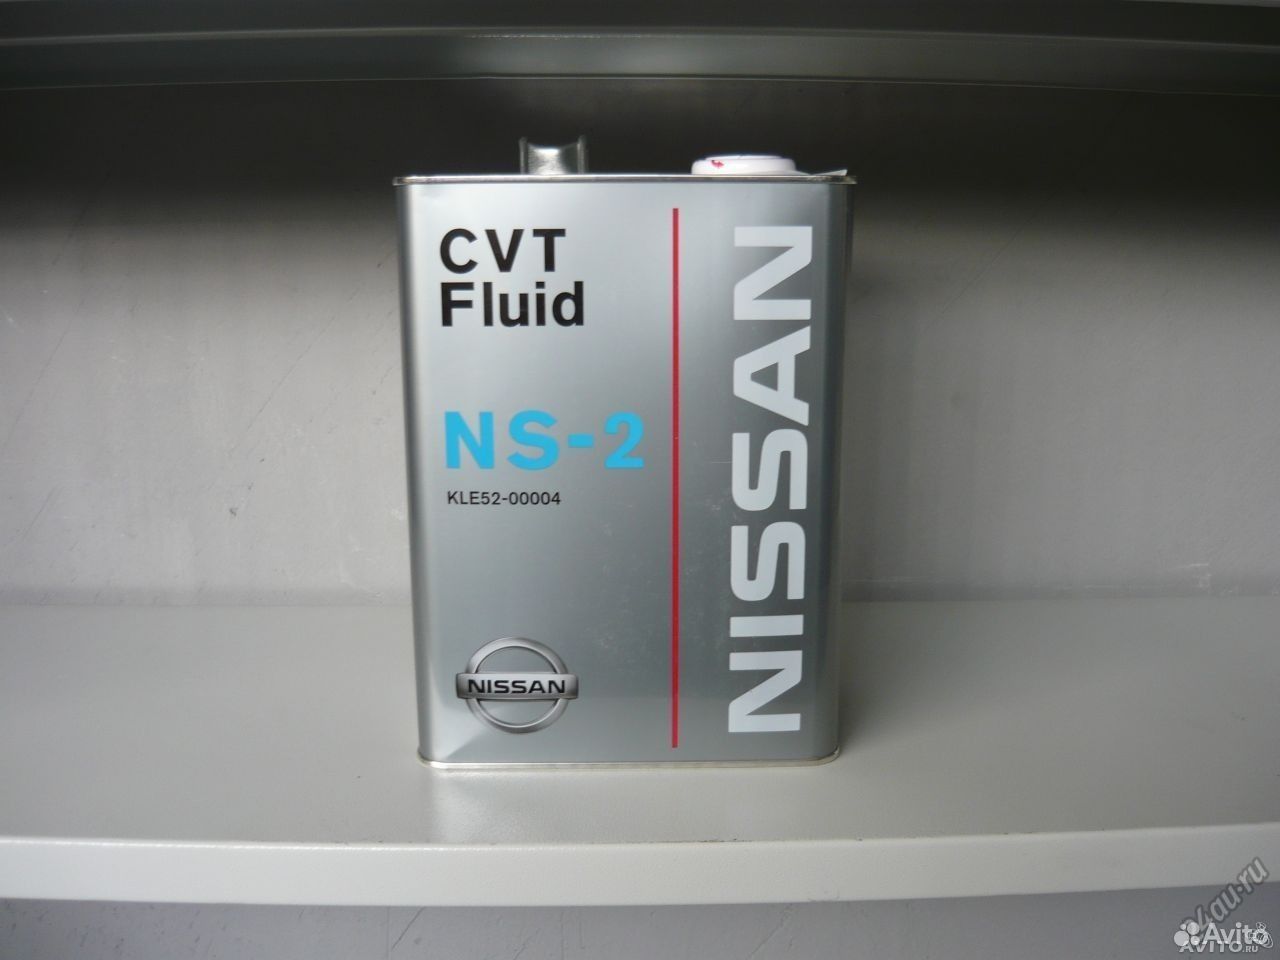 Ниссан либерти масла. Nissan CVT Fluid NS-2 4л (kle52-00004). Nissan CVT Fluid NS-2 - жидкость для вариаторов Ниссан 4 л.. Масло для вариатора Nissan NS-2. Nissan CVT NS-2 kle52-00004 4л.